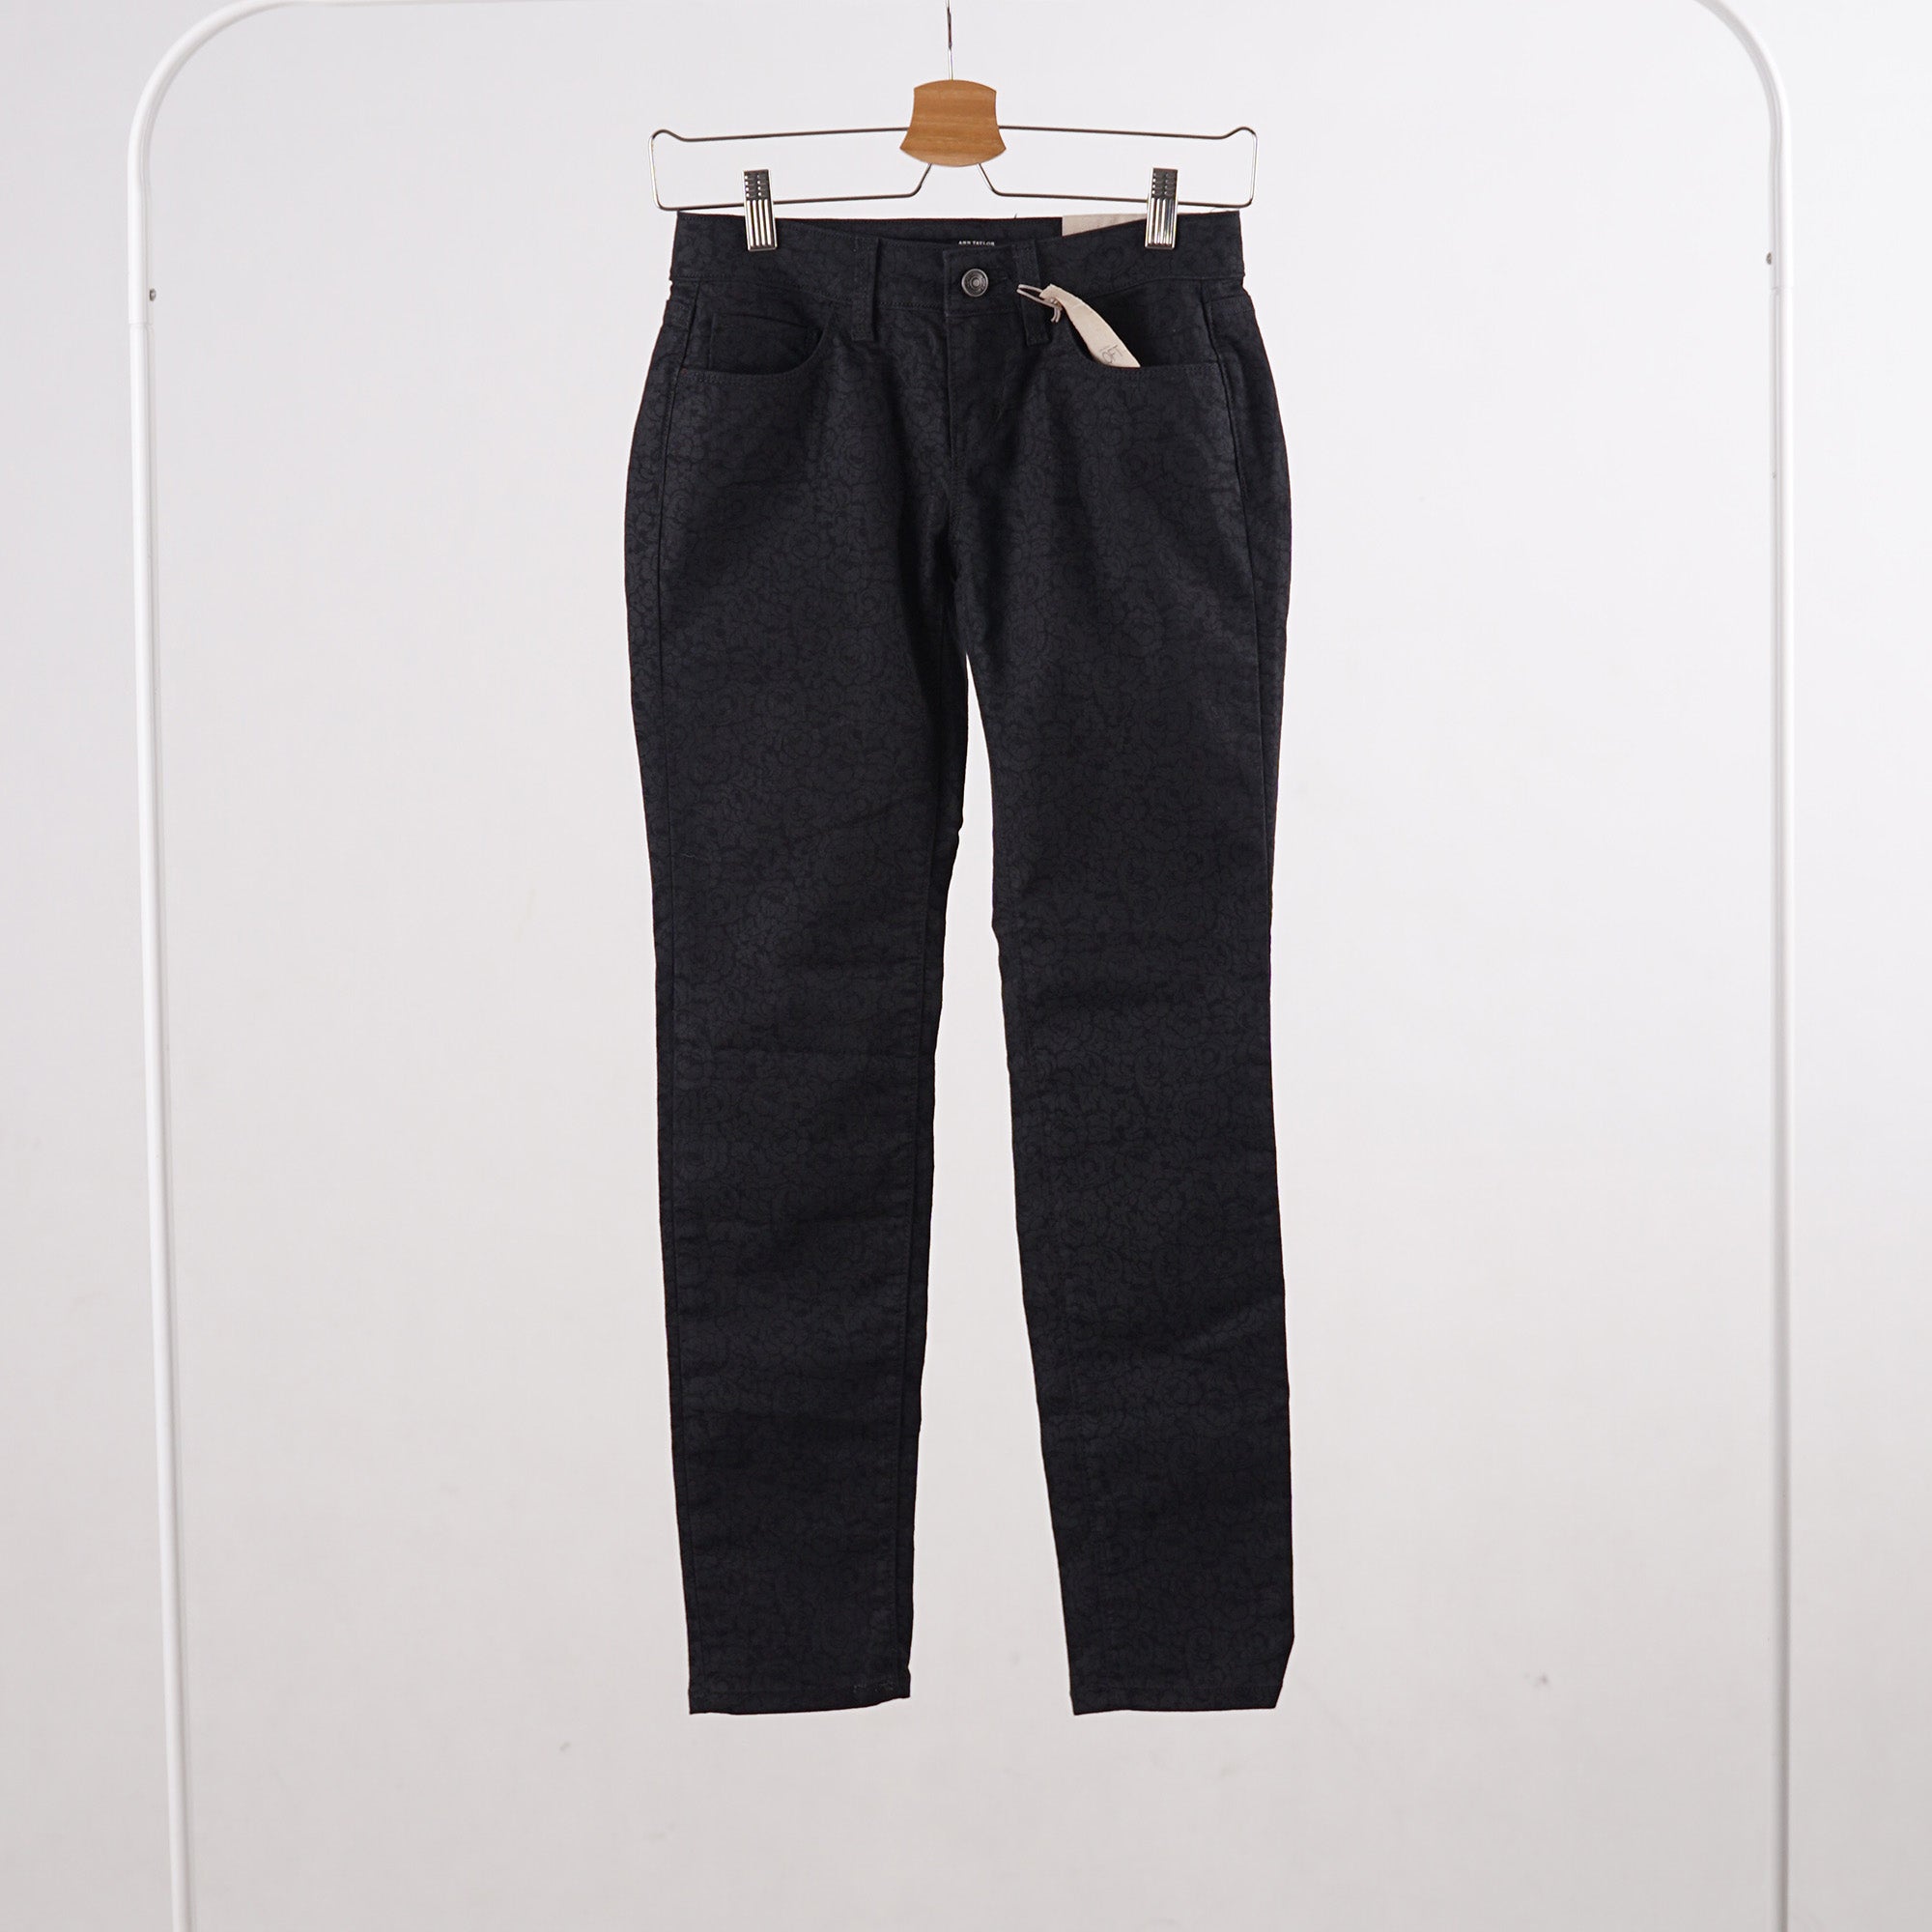 Jeans Wanita - Curvy Skinny Black Floral Jeans Pants (MLL 58)